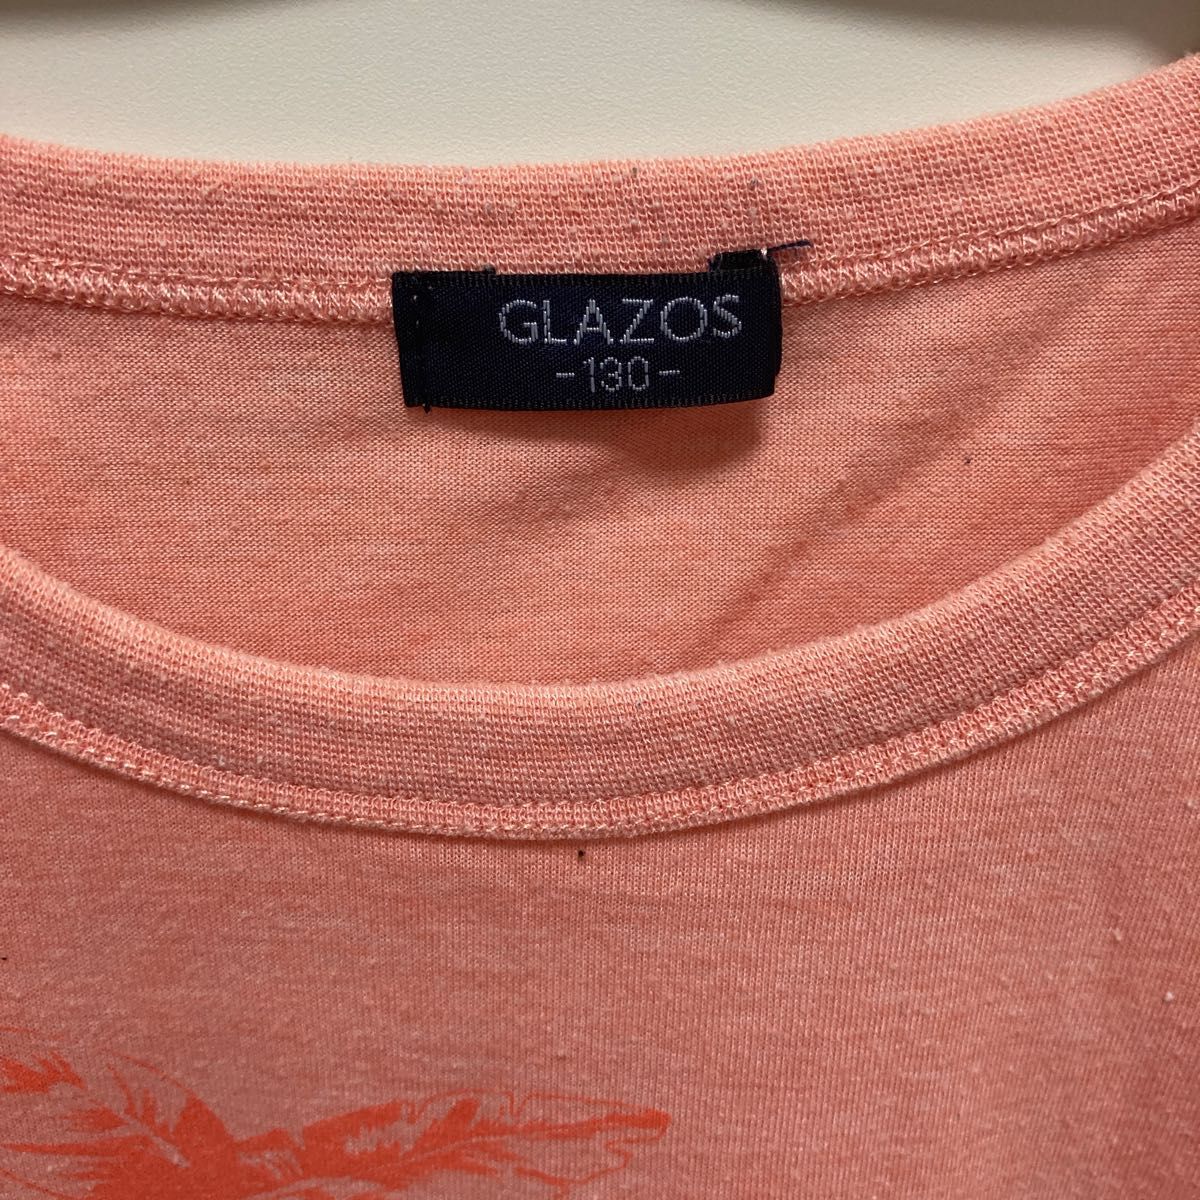 GLAZOS グラゾス  子供服 オレンジ  半袖Tシャツ 130